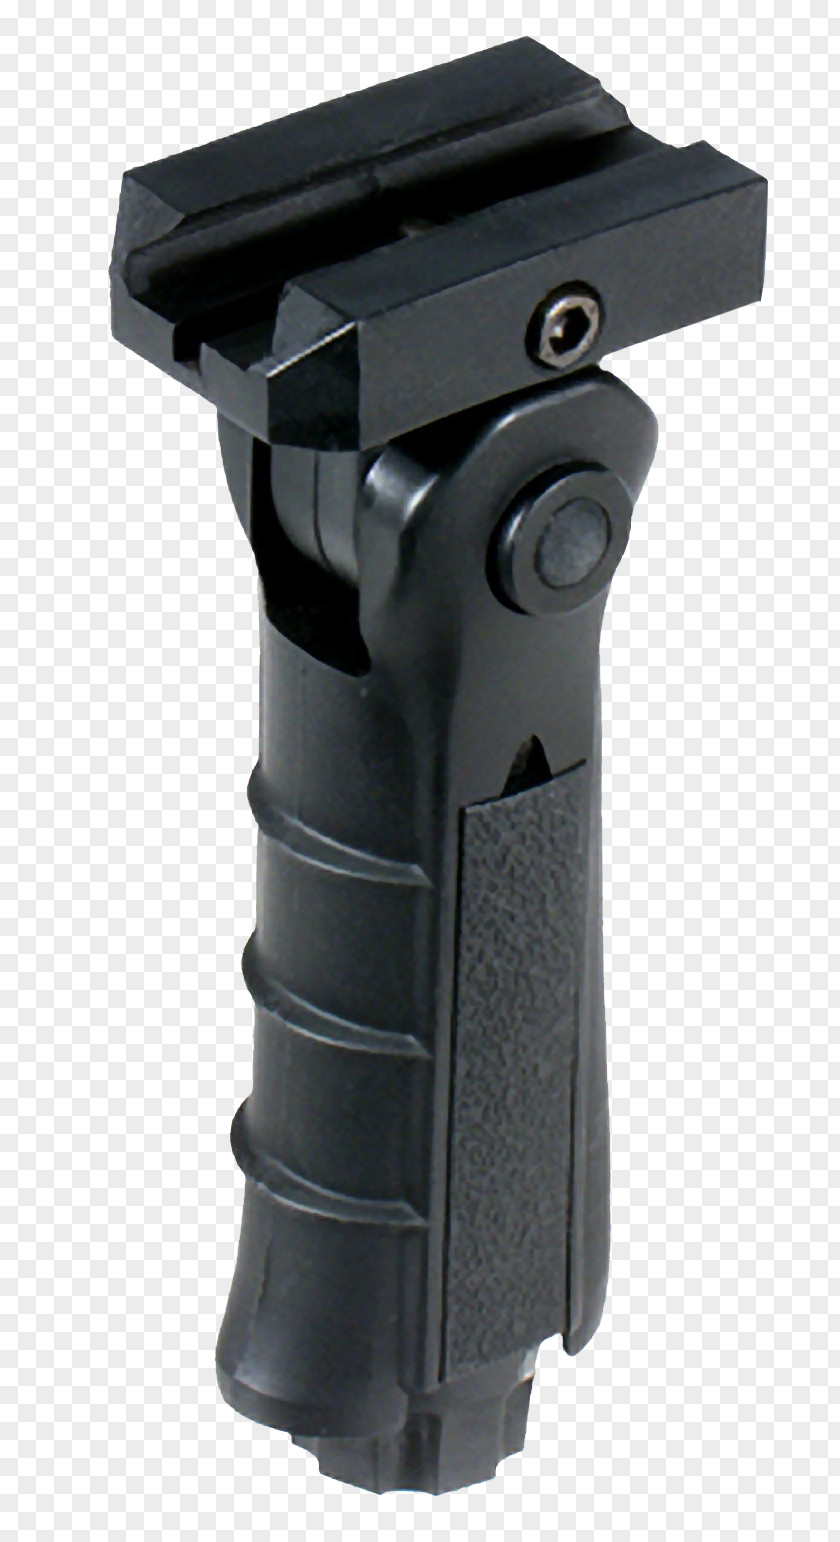 Weapon Vertical Forward Grip Picatinny Rail Firearm Pistol PNG